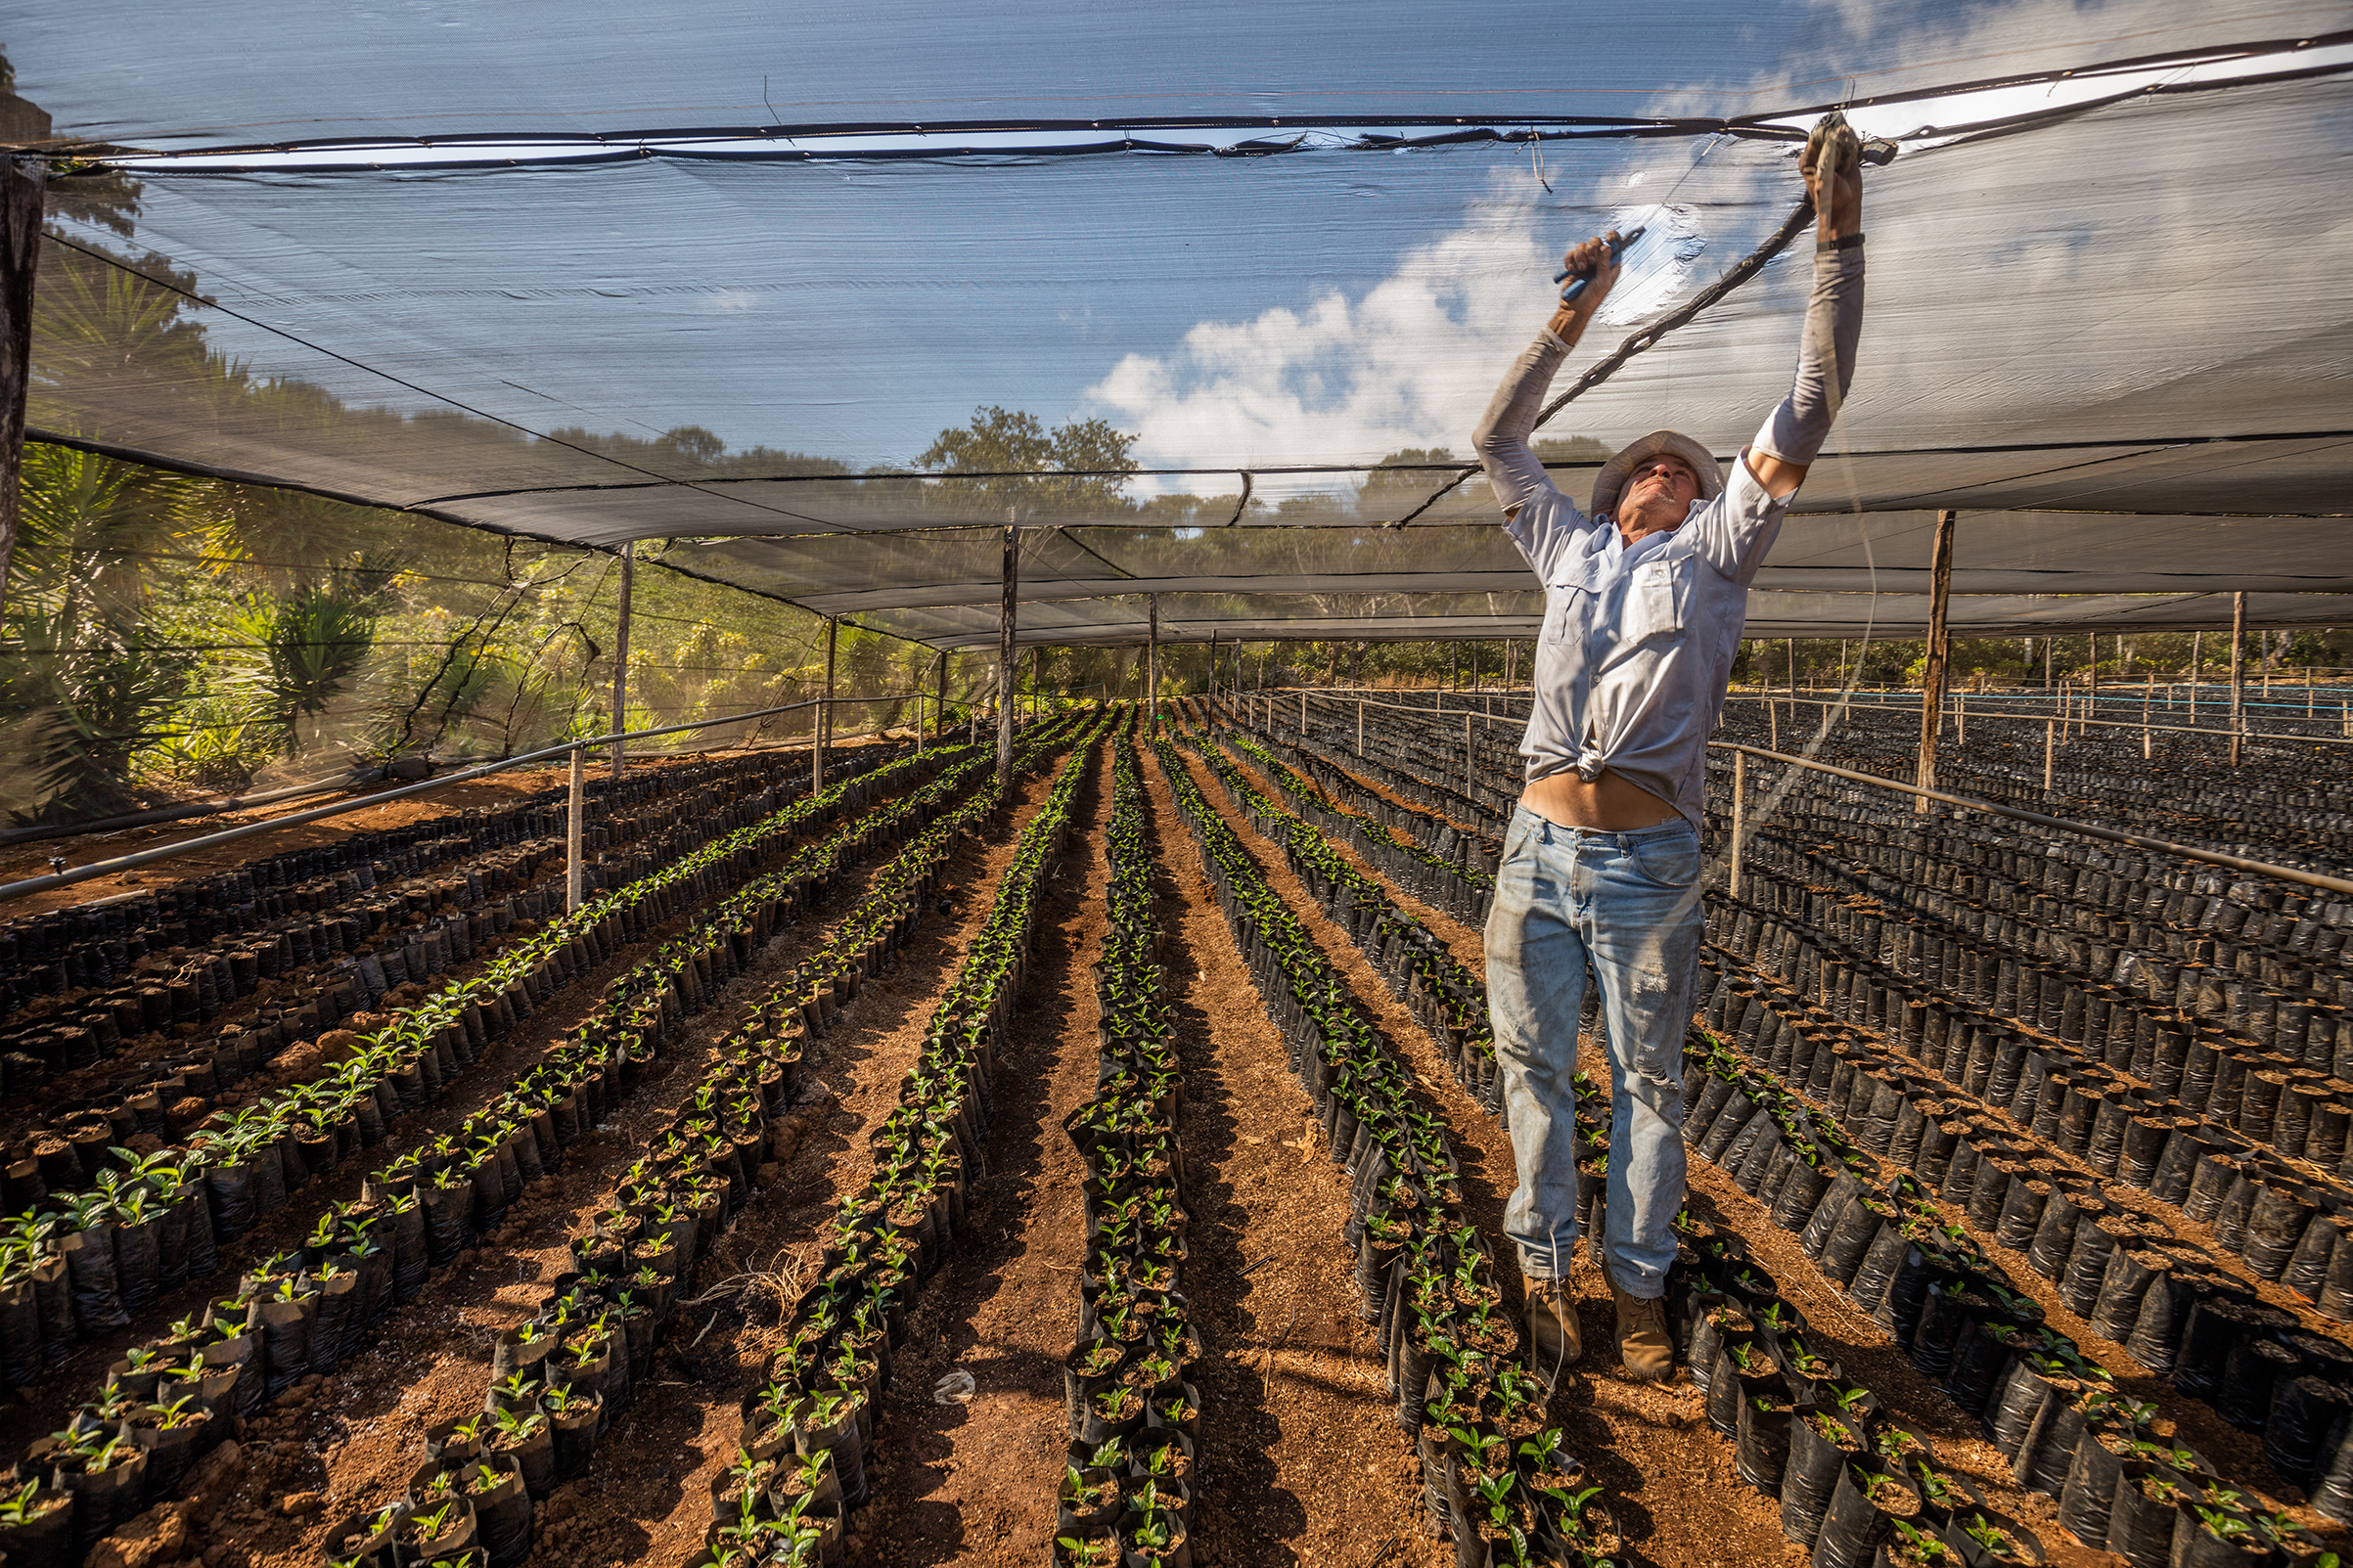 A worker fixes netting at a nursery that grows disease-resistant varieties of coffee in Bajo Corrales, Costa Rica (George Steinmetz for TIME)